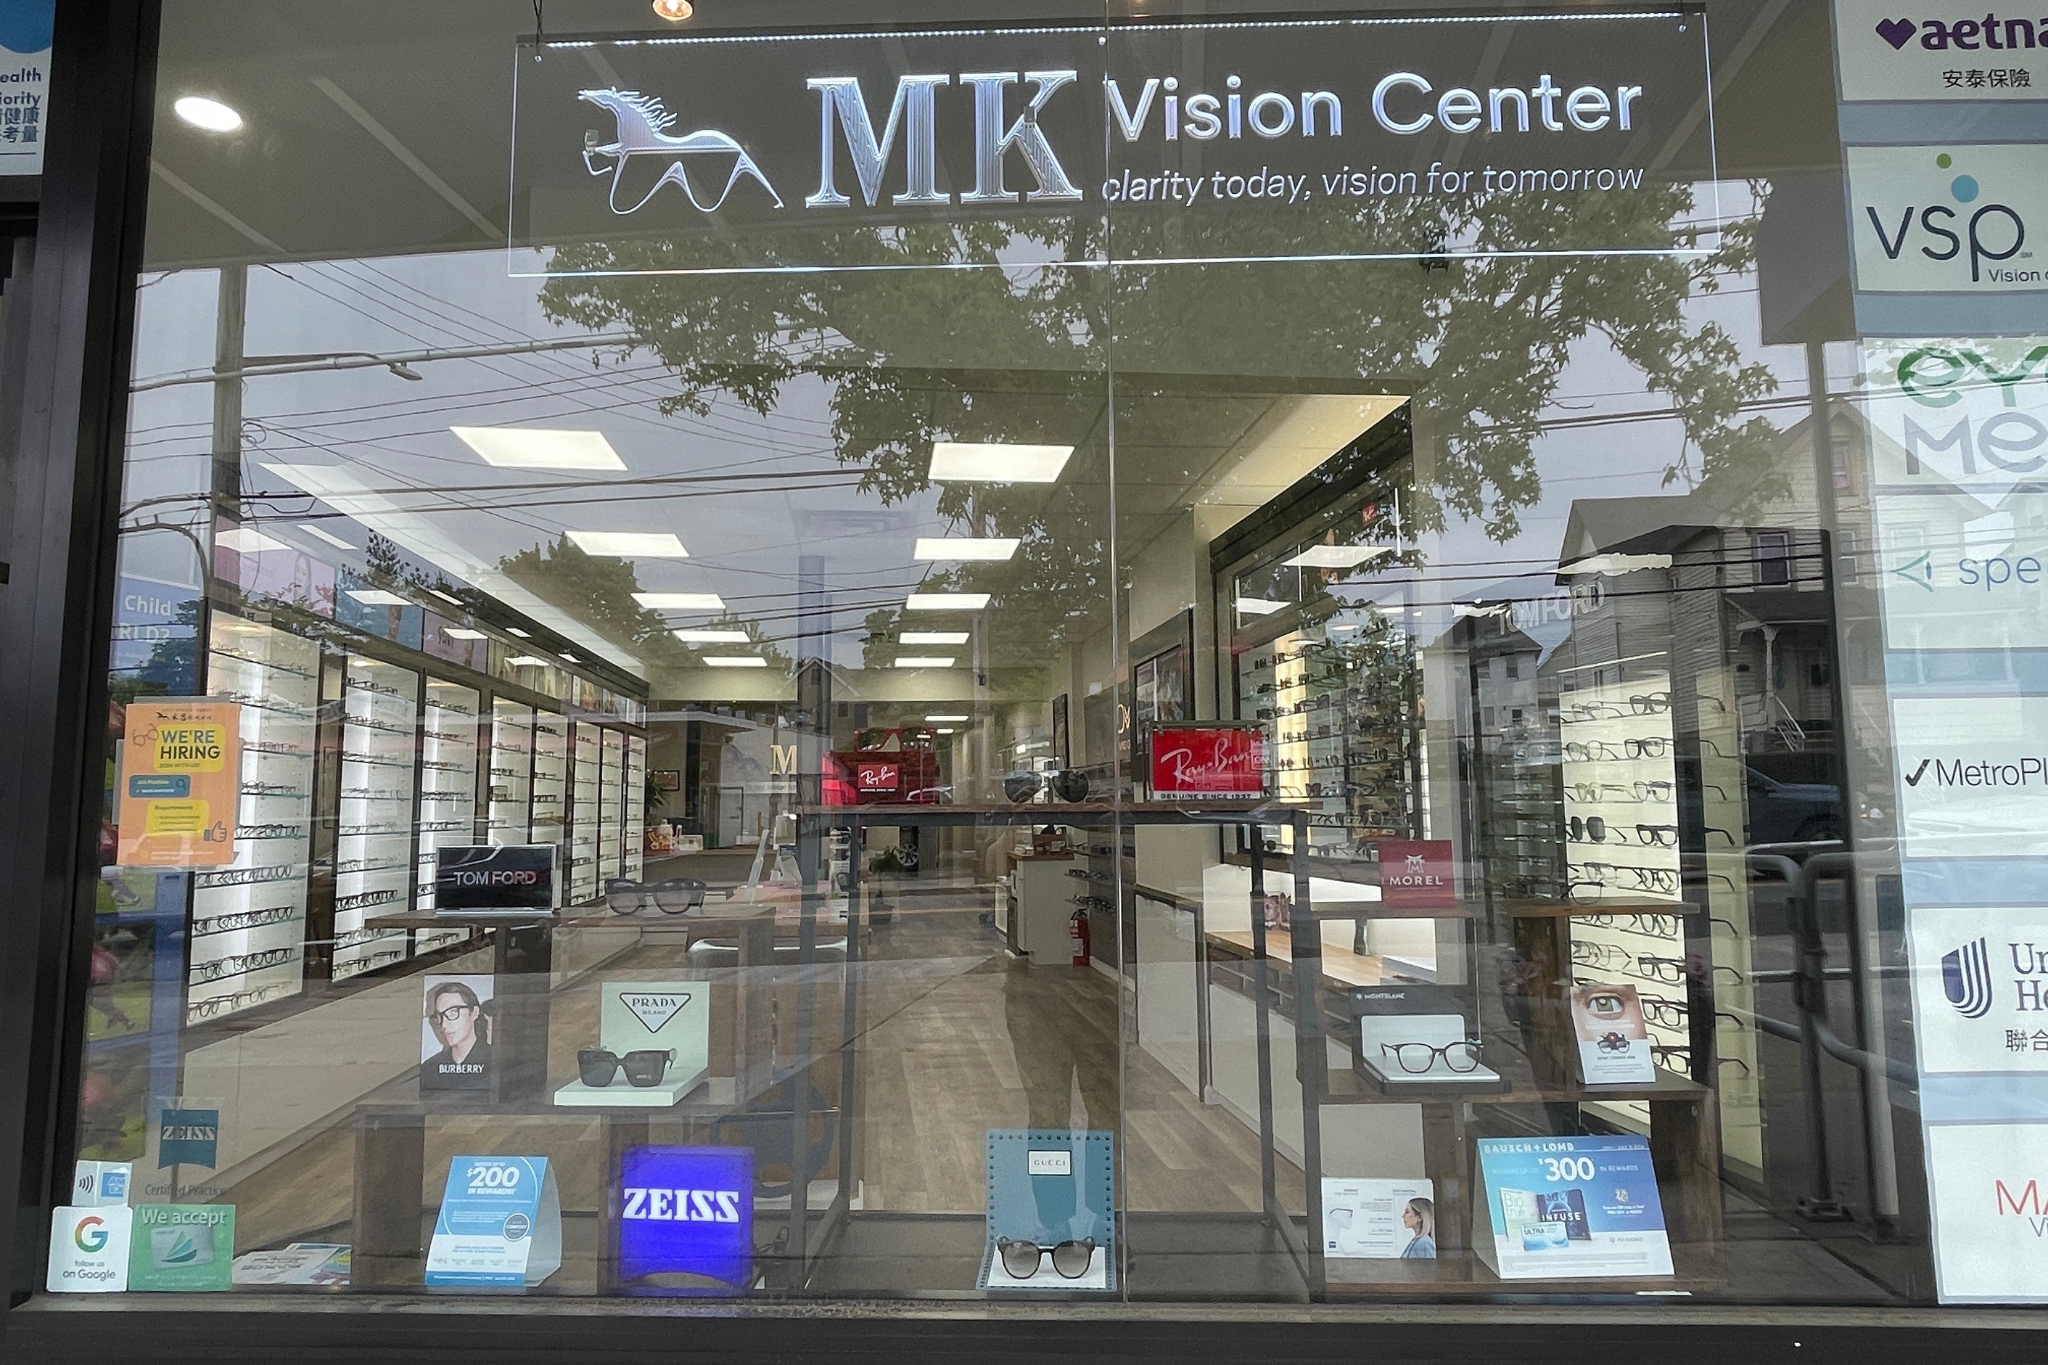 mk-vision-center-staten-island.png